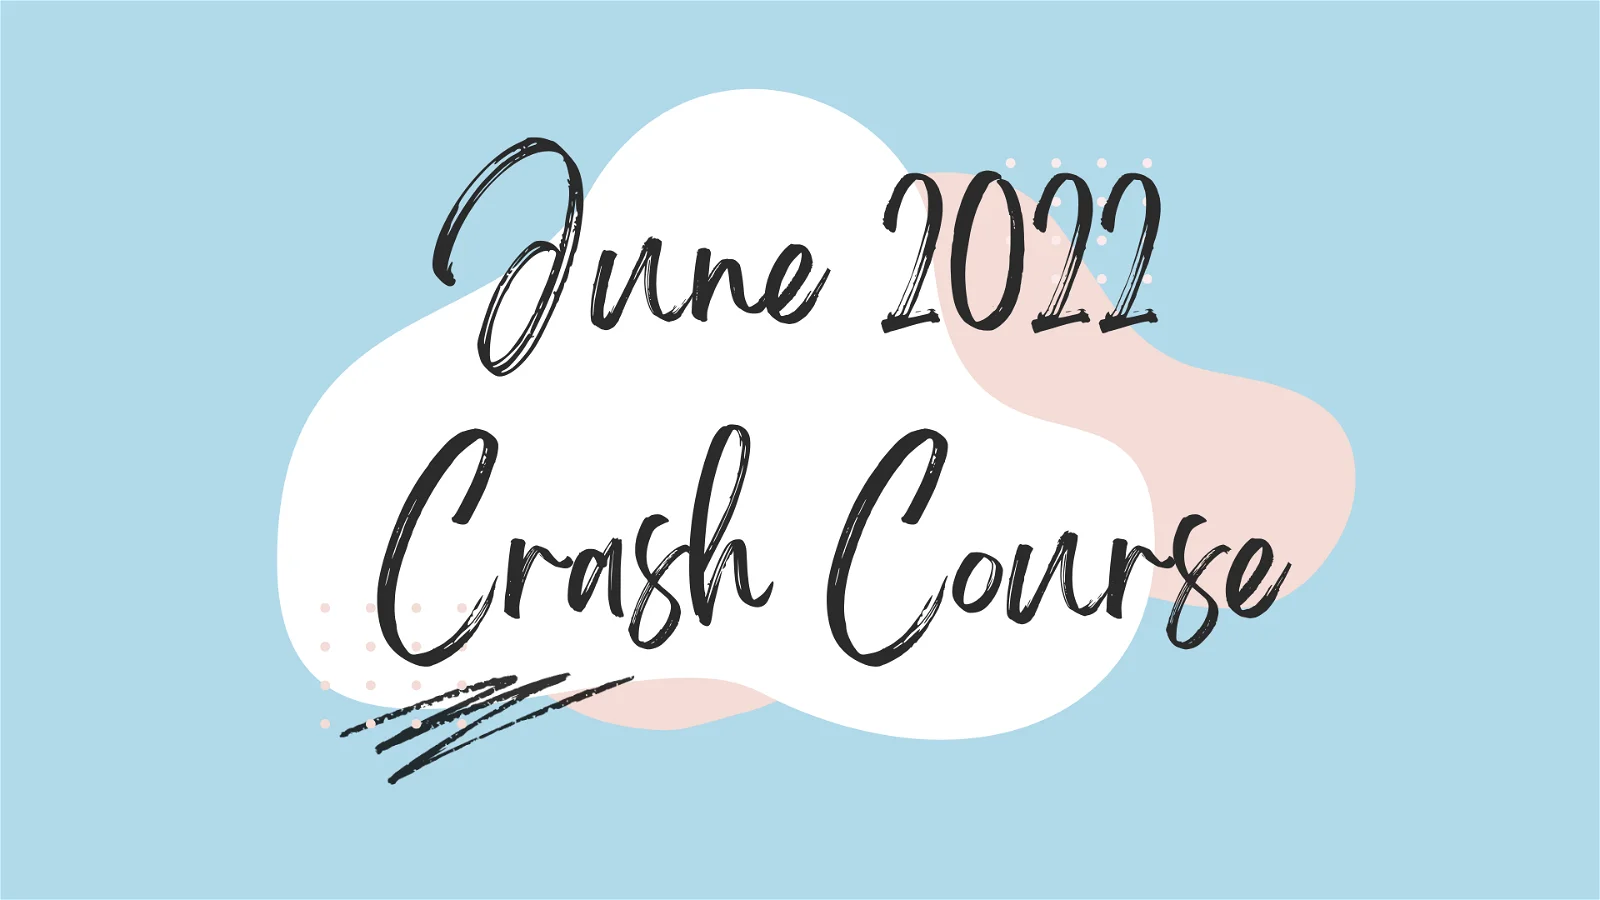 June 2022 crash course logo